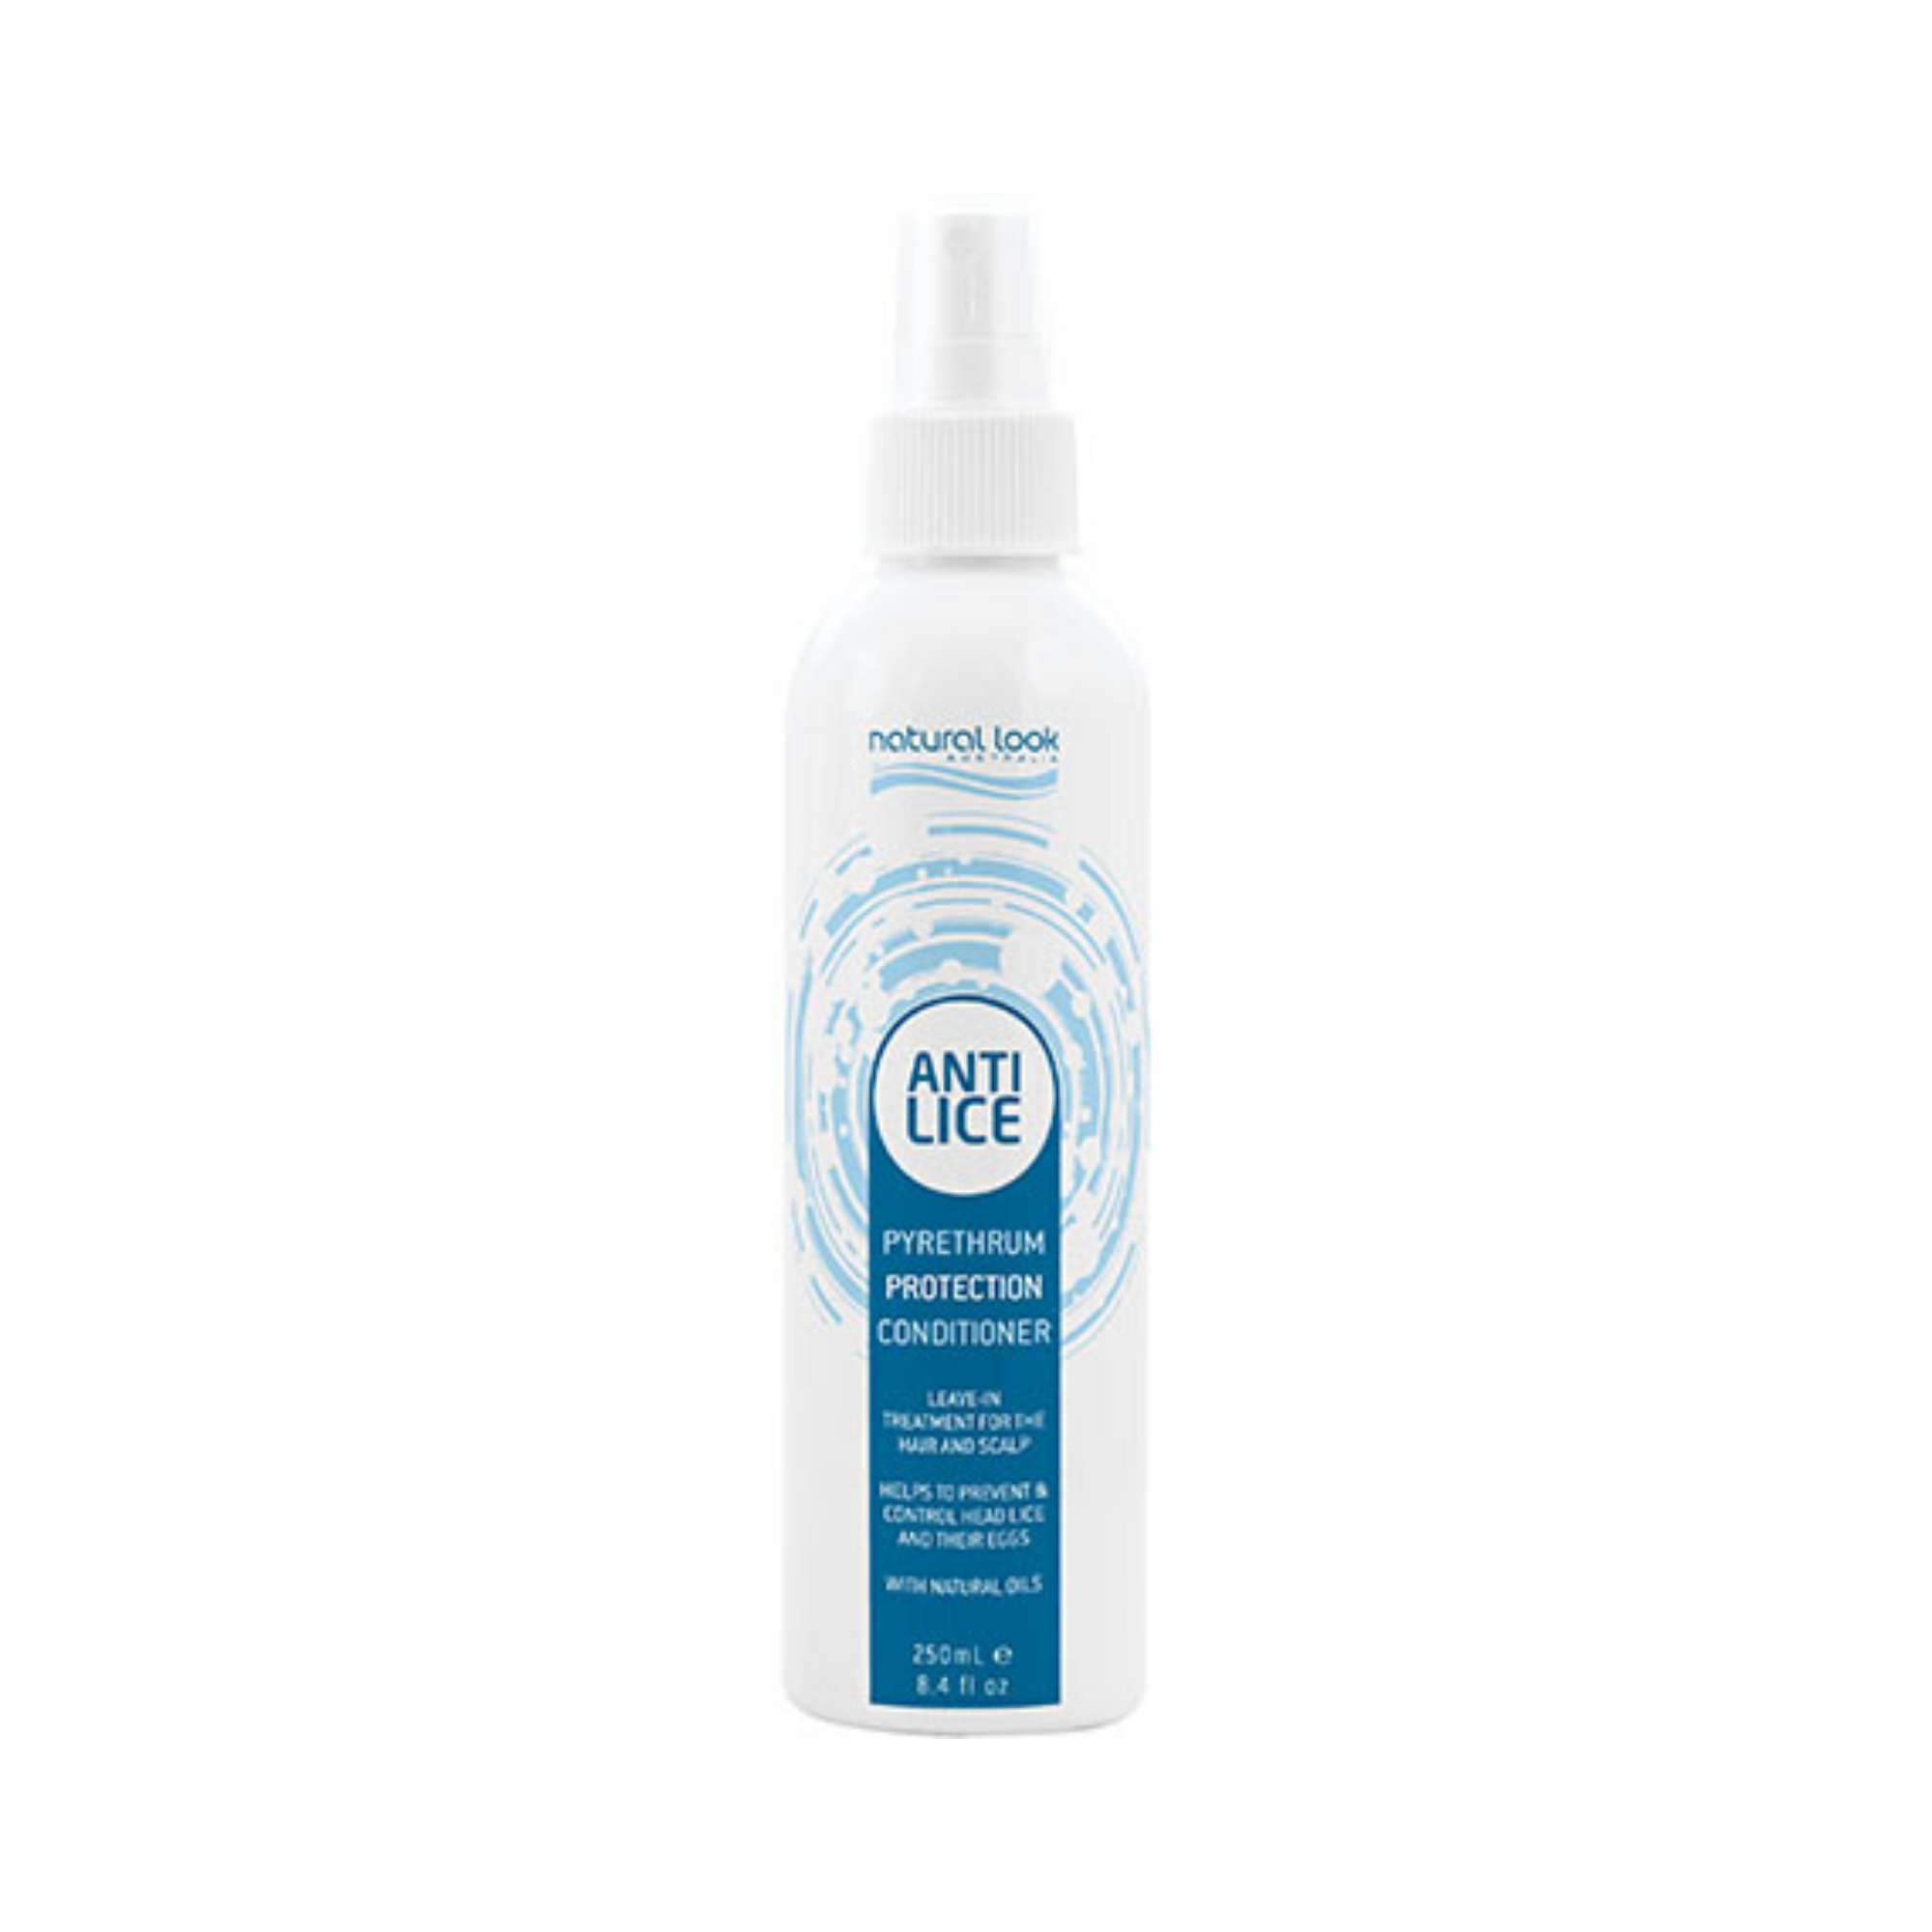 Anti-Lice Pyrethrum Leave-in Conditioner Spray